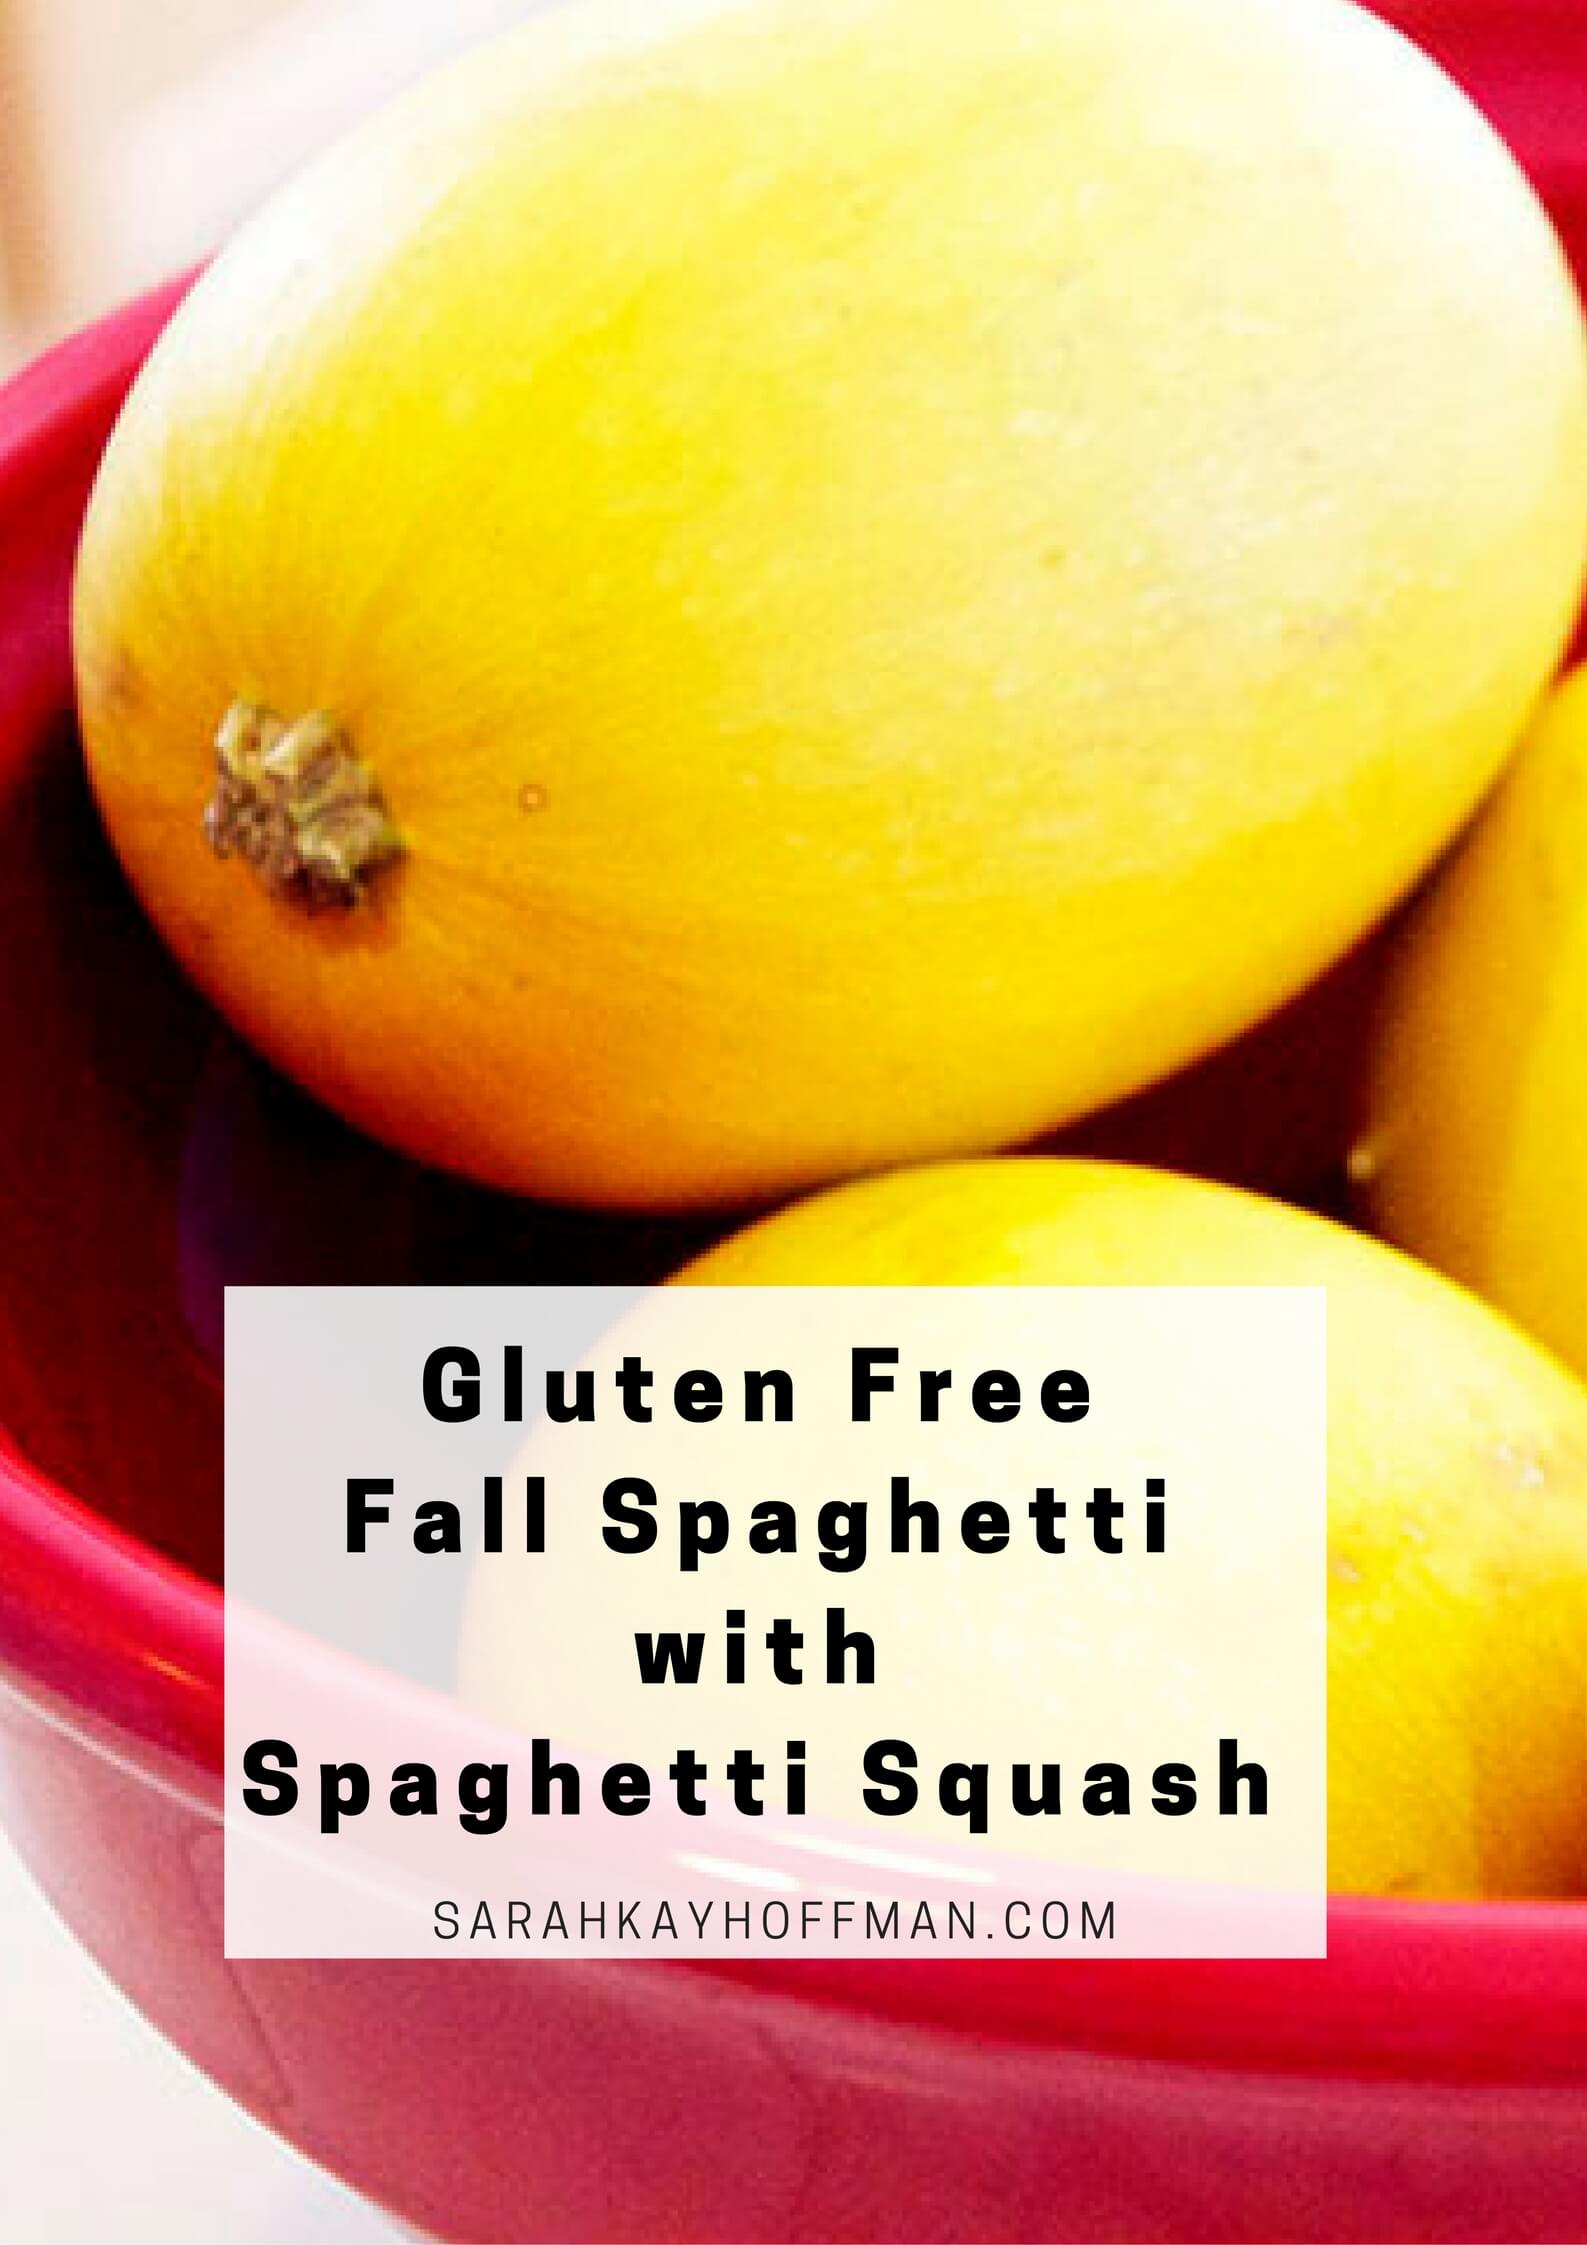 Gluten Free Fall Spaghetti with Spaghetti Squash sarahkayhoffman.com